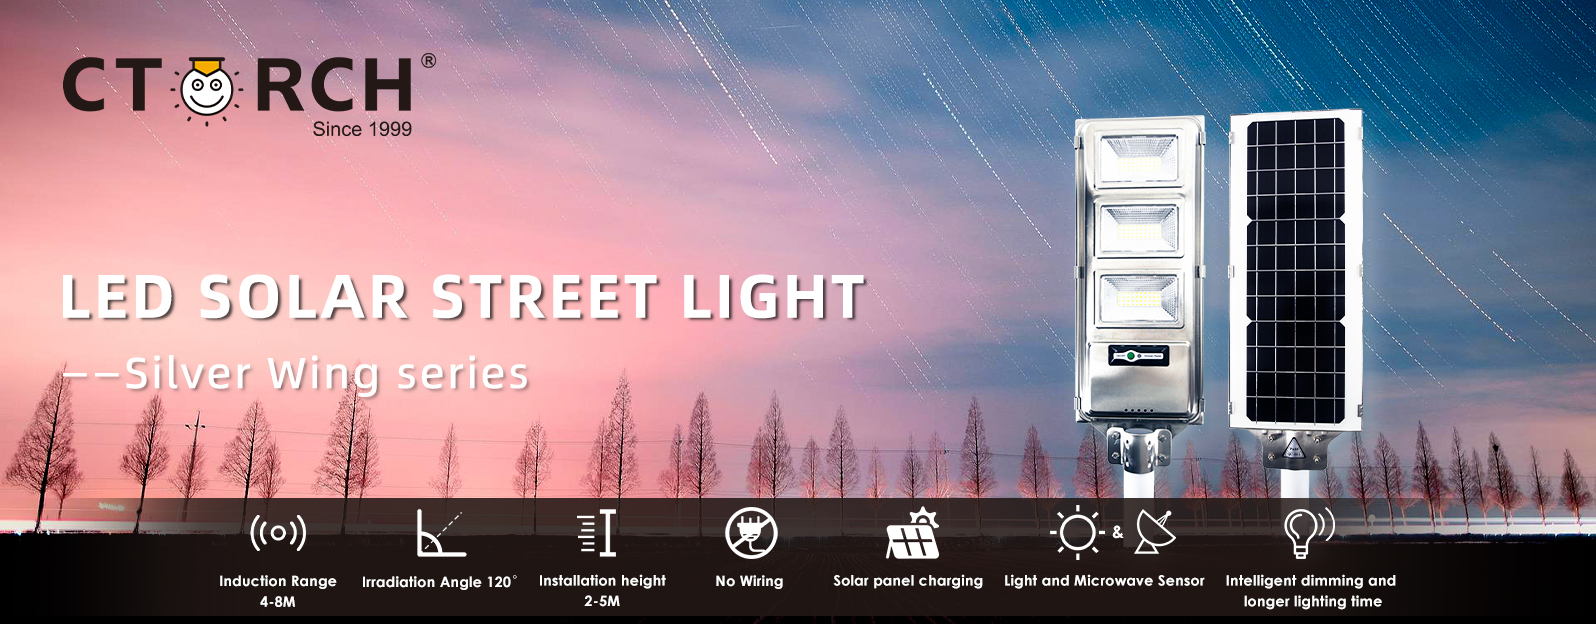 LED SOLAR STREET LIGHT-Silver Wing Series